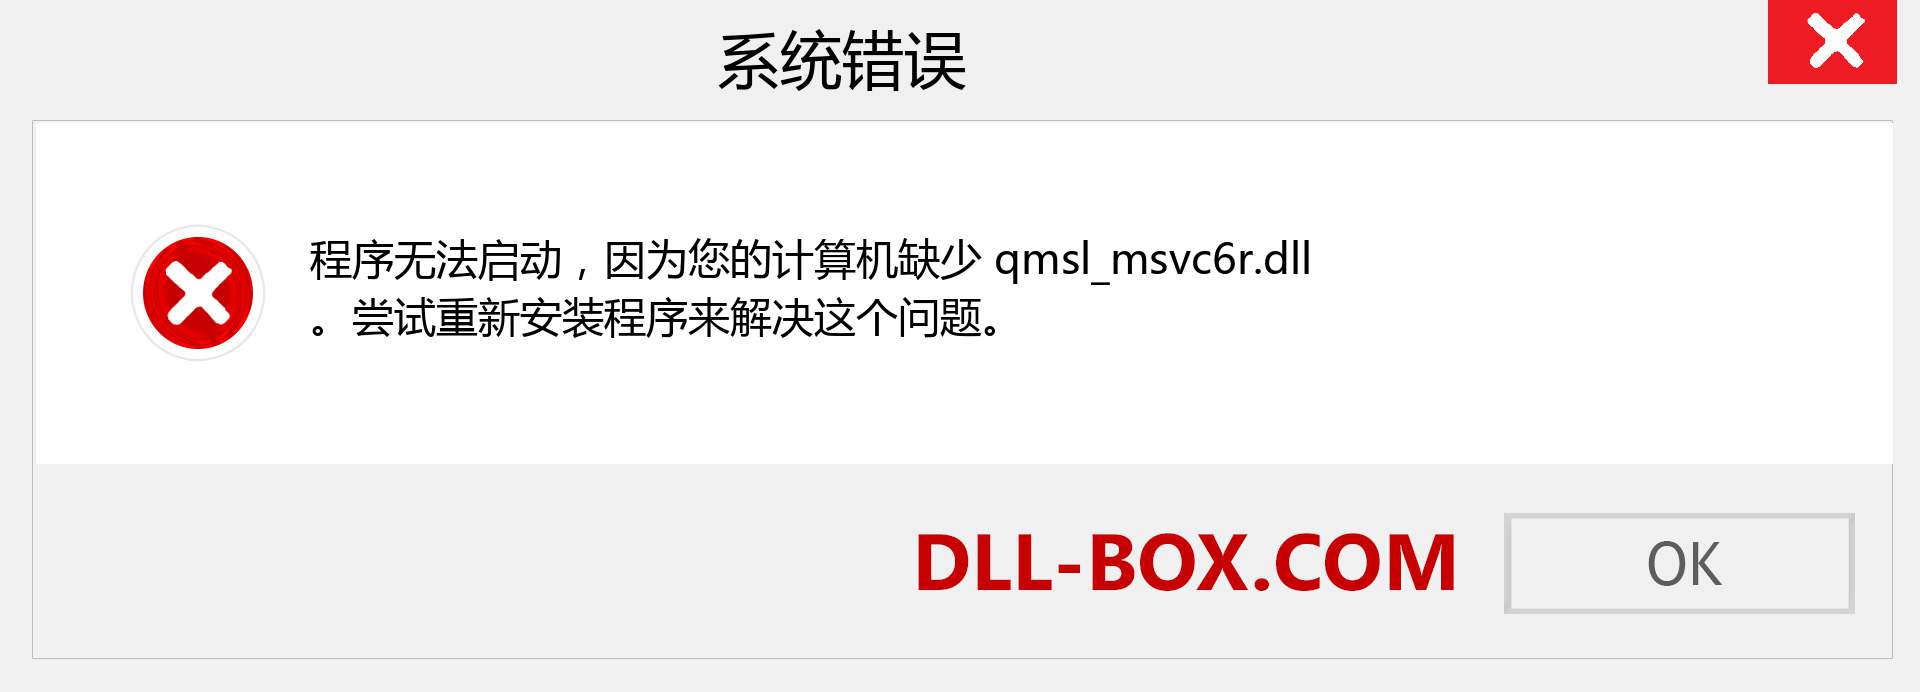 qmsl_msvc6r.dll 文件丢失？。 适用于 Windows 7、8、10 的下载 - 修复 Windows、照片、图像上的 qmsl_msvc6r dll 丢失错误